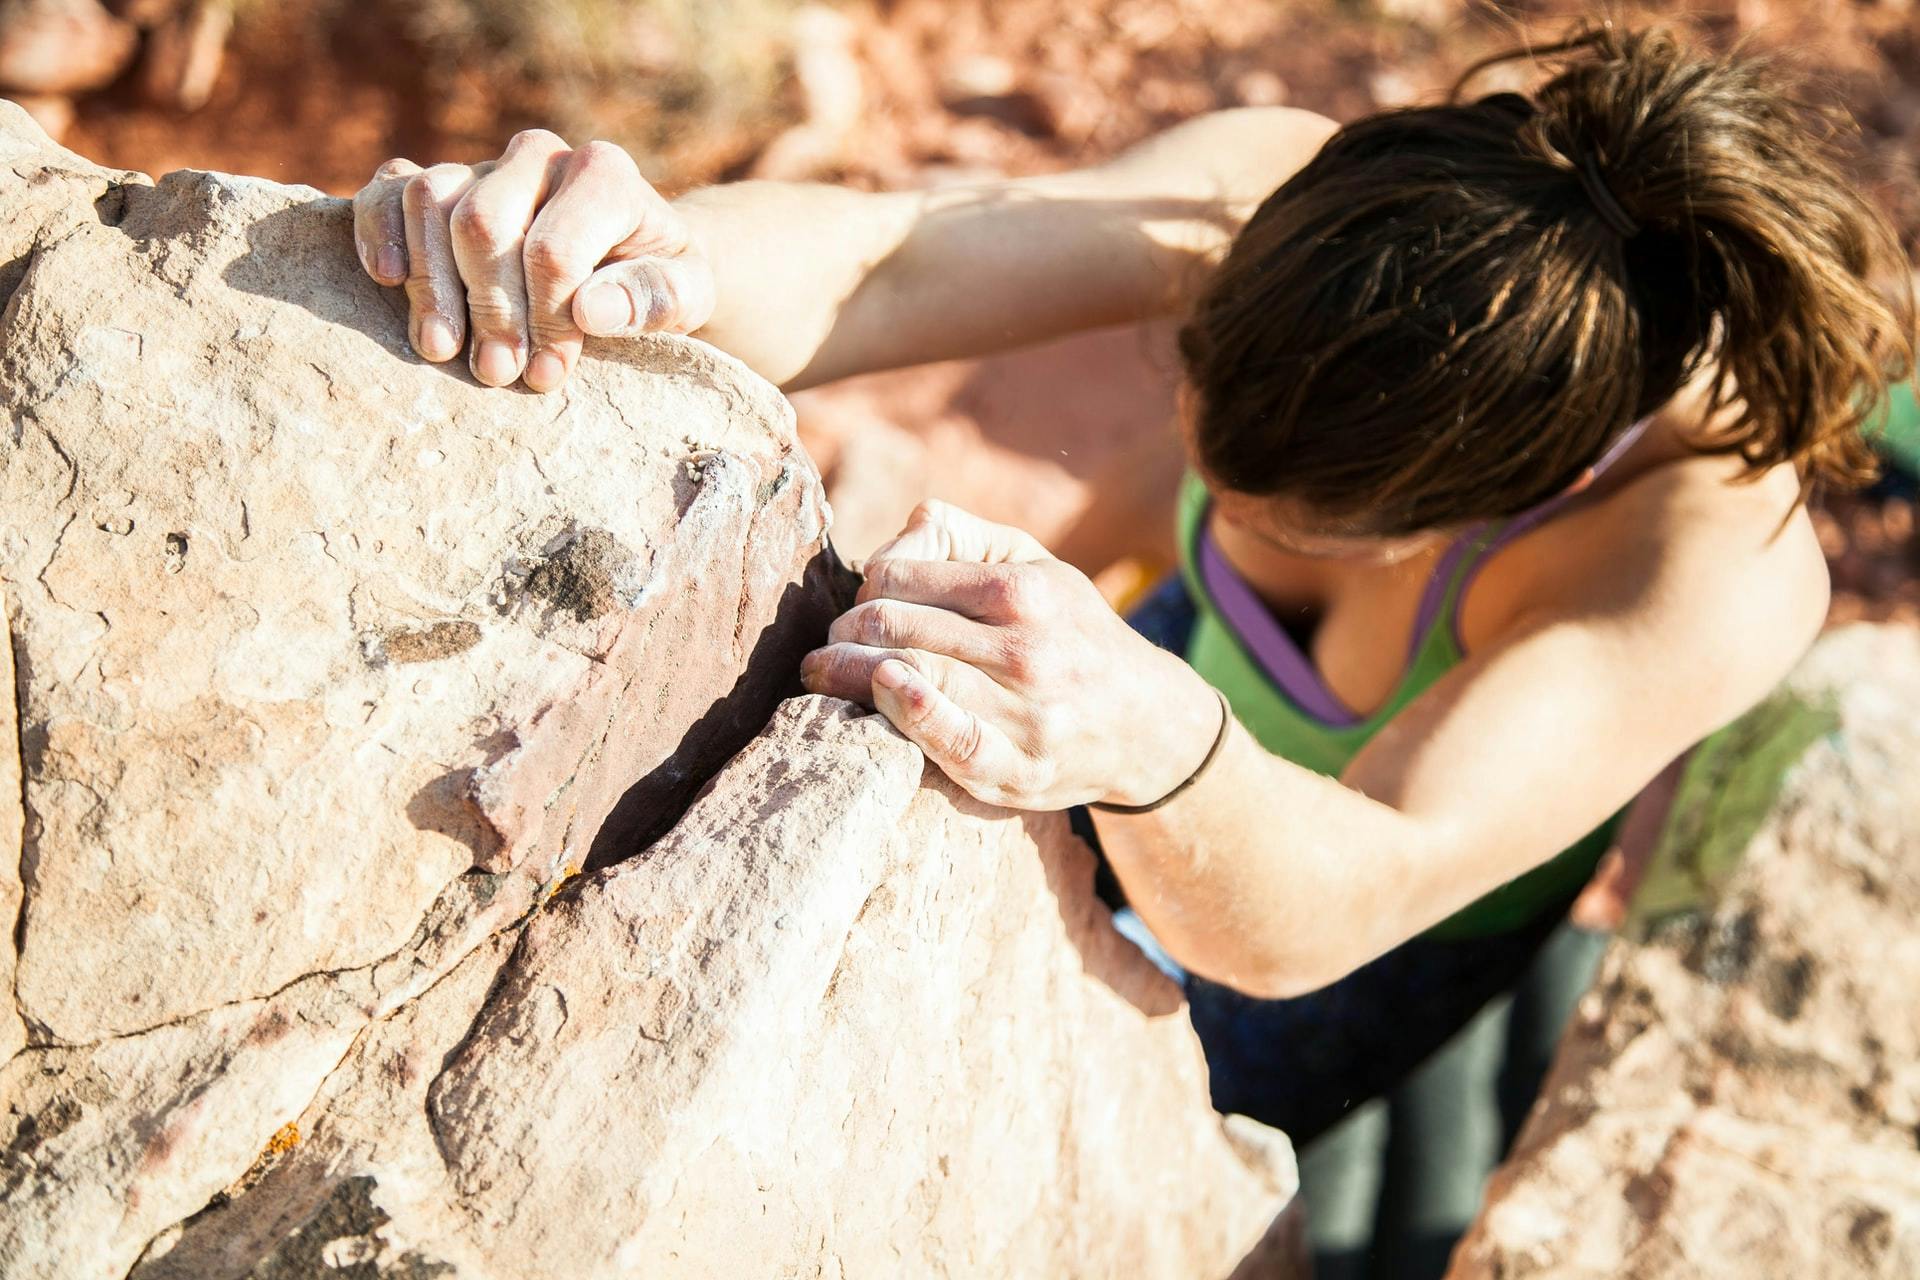 Choosing the type of climbing you want to do